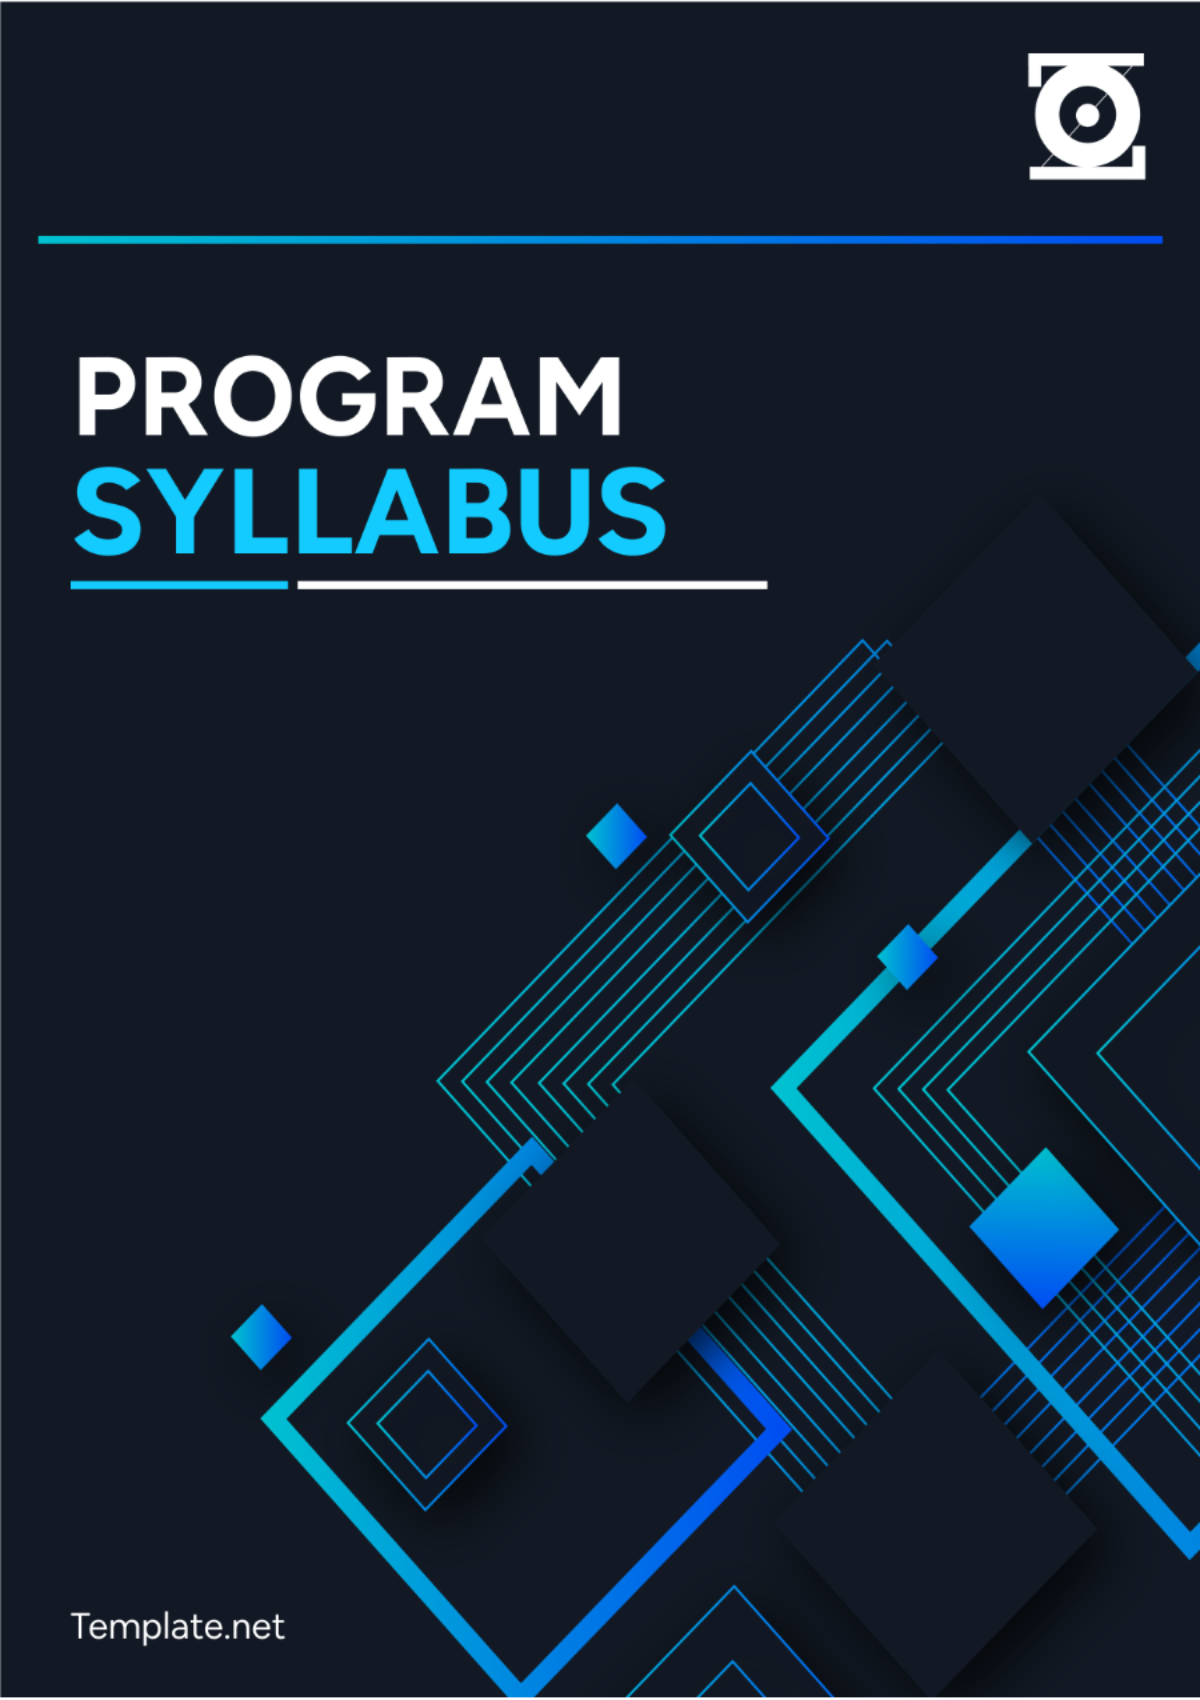 Program Syllabus Template